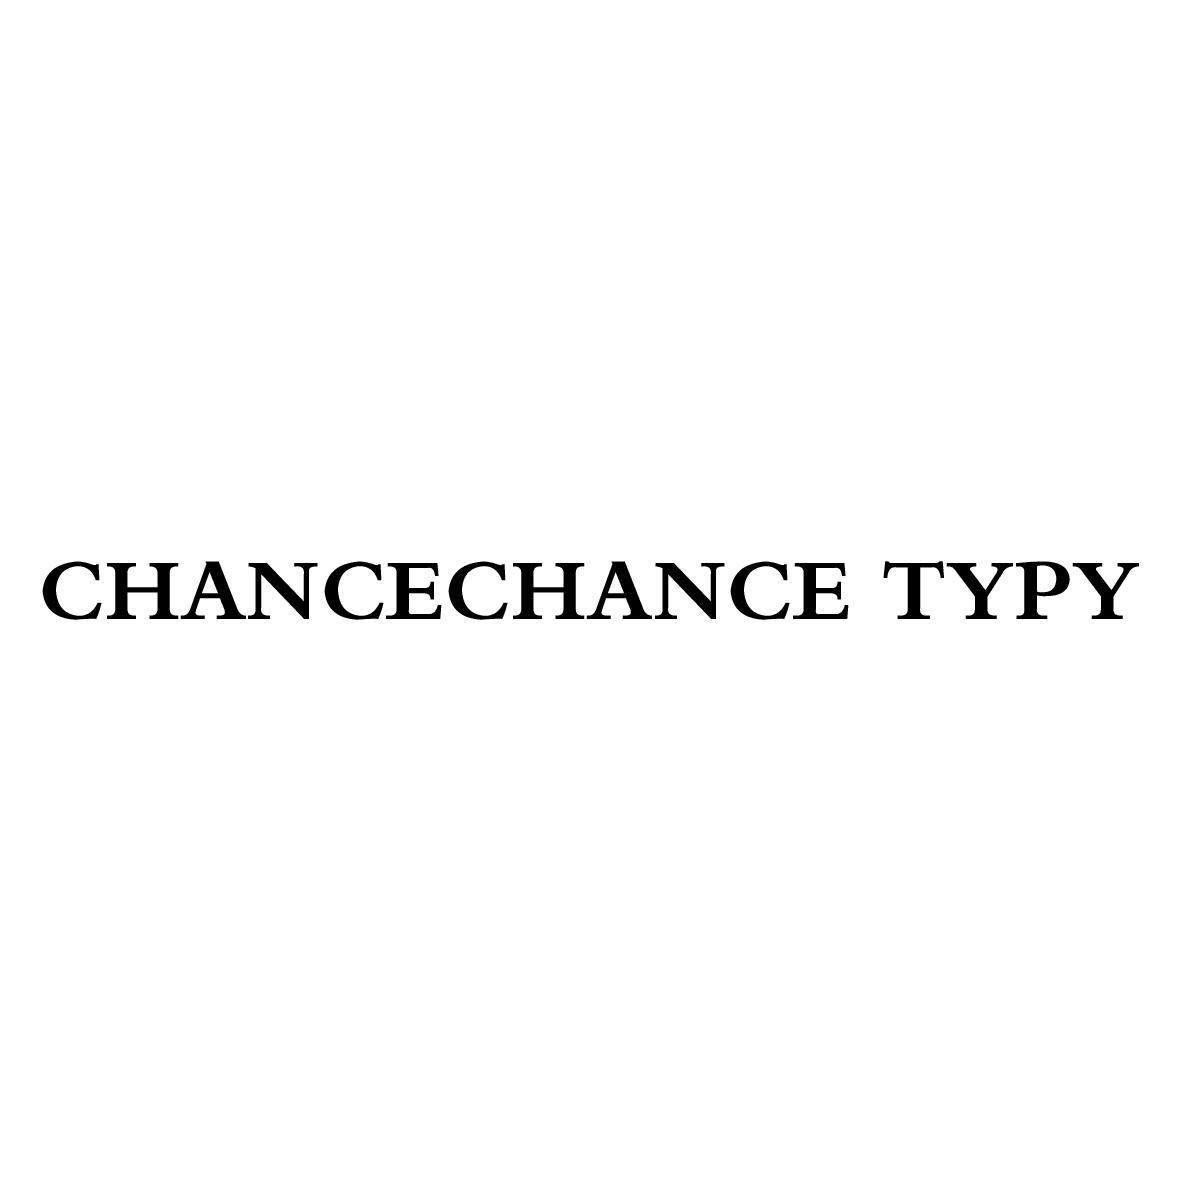 CHANCECHANCE TYPY